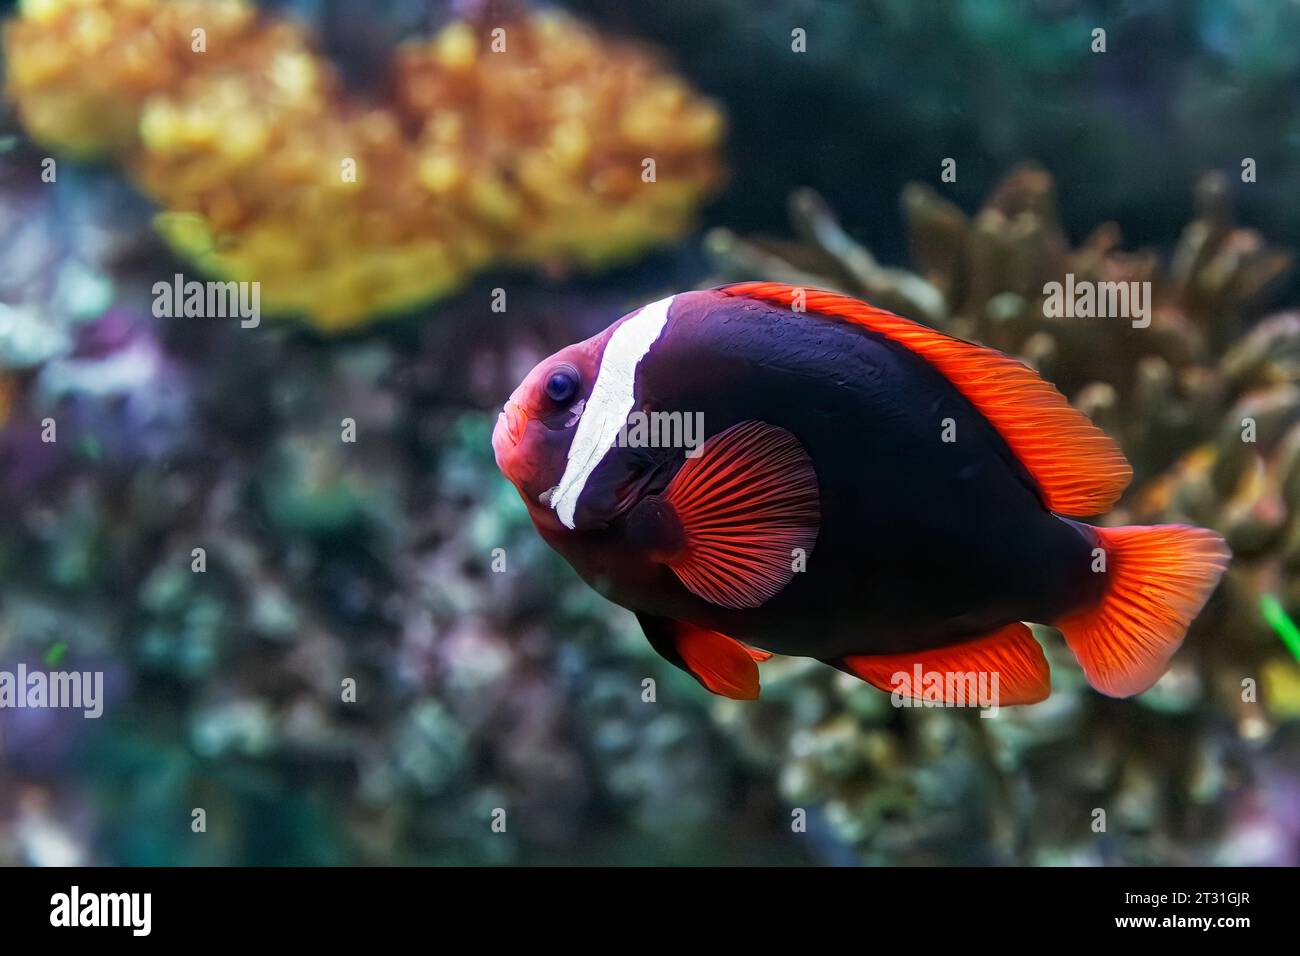 Female Tomato Clownfish (Amphiprion frenatus) AKA: blackback anemonefish, bridled anemonefish, fire clown, and red tomato clown. Stock Photo